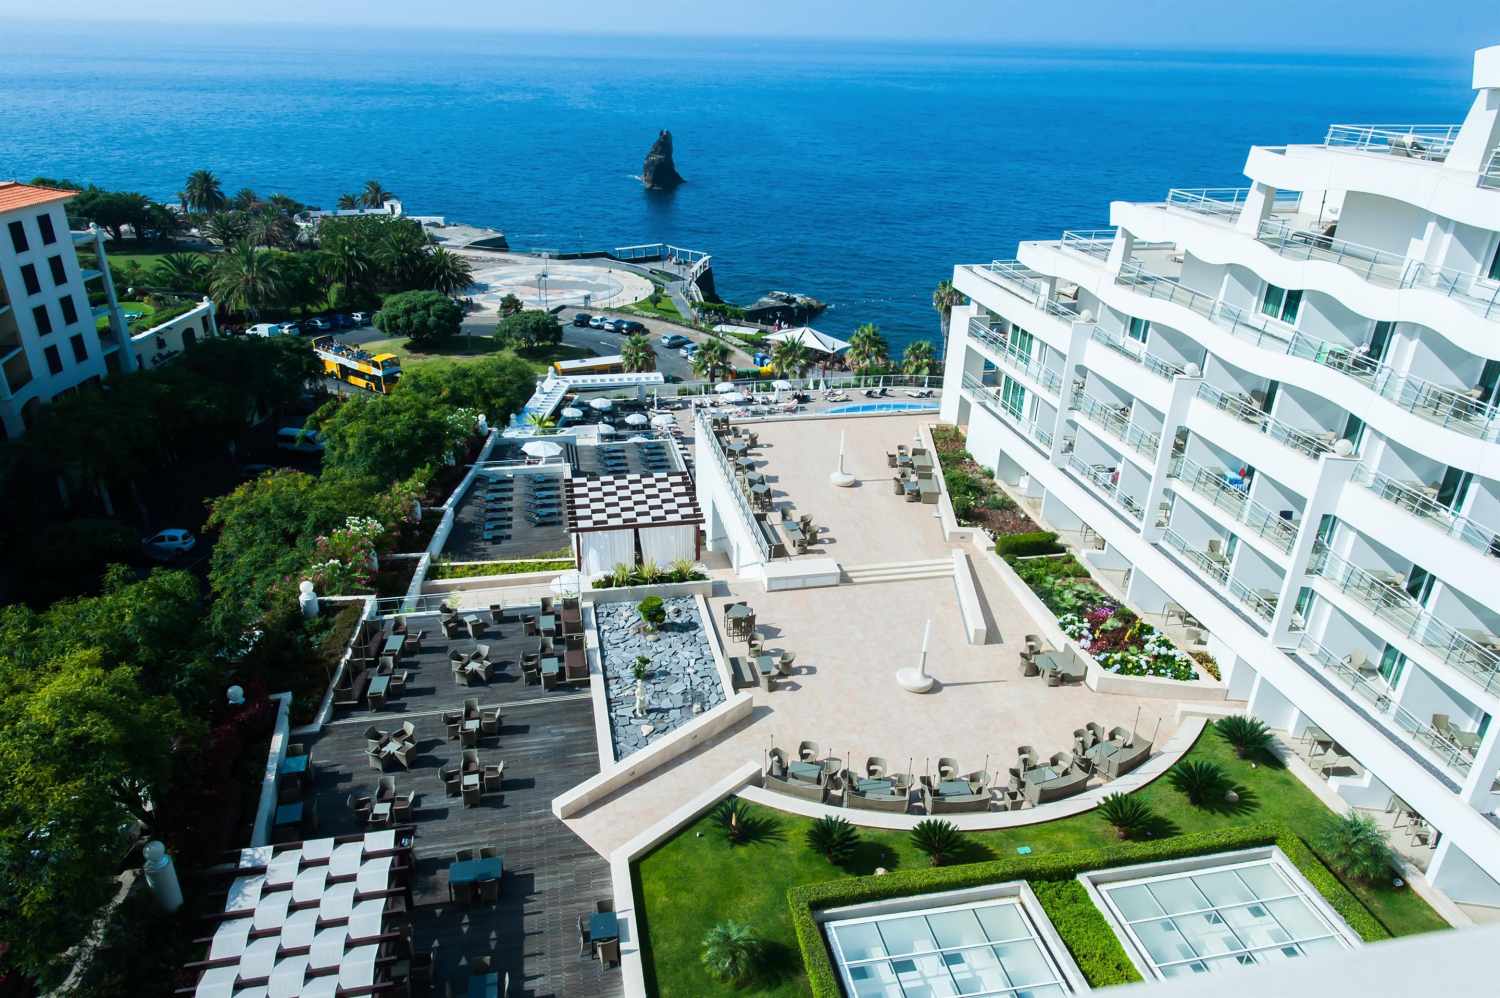 Meliá Madeira Mare Hotel & Spa, Funchal, Madeira, Portugal